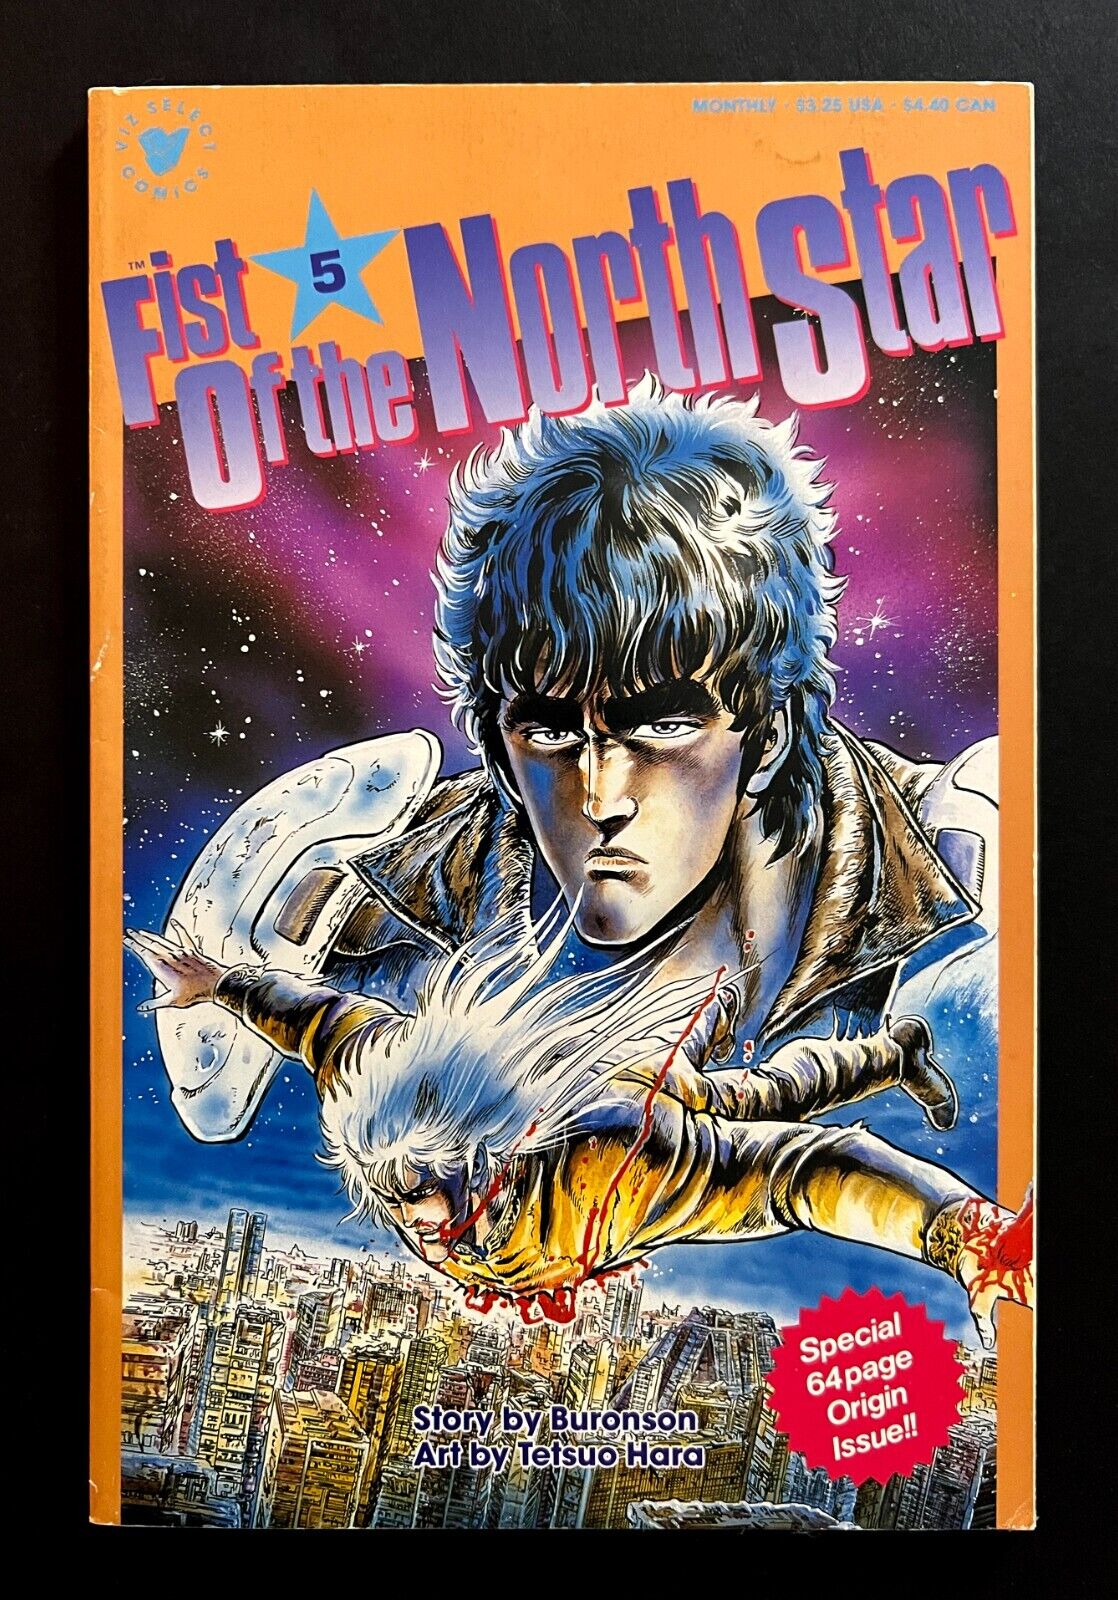 FIST OF THE NORTH STAR #5 64 Page Origin Issue Manga Anime Viz Media 1989